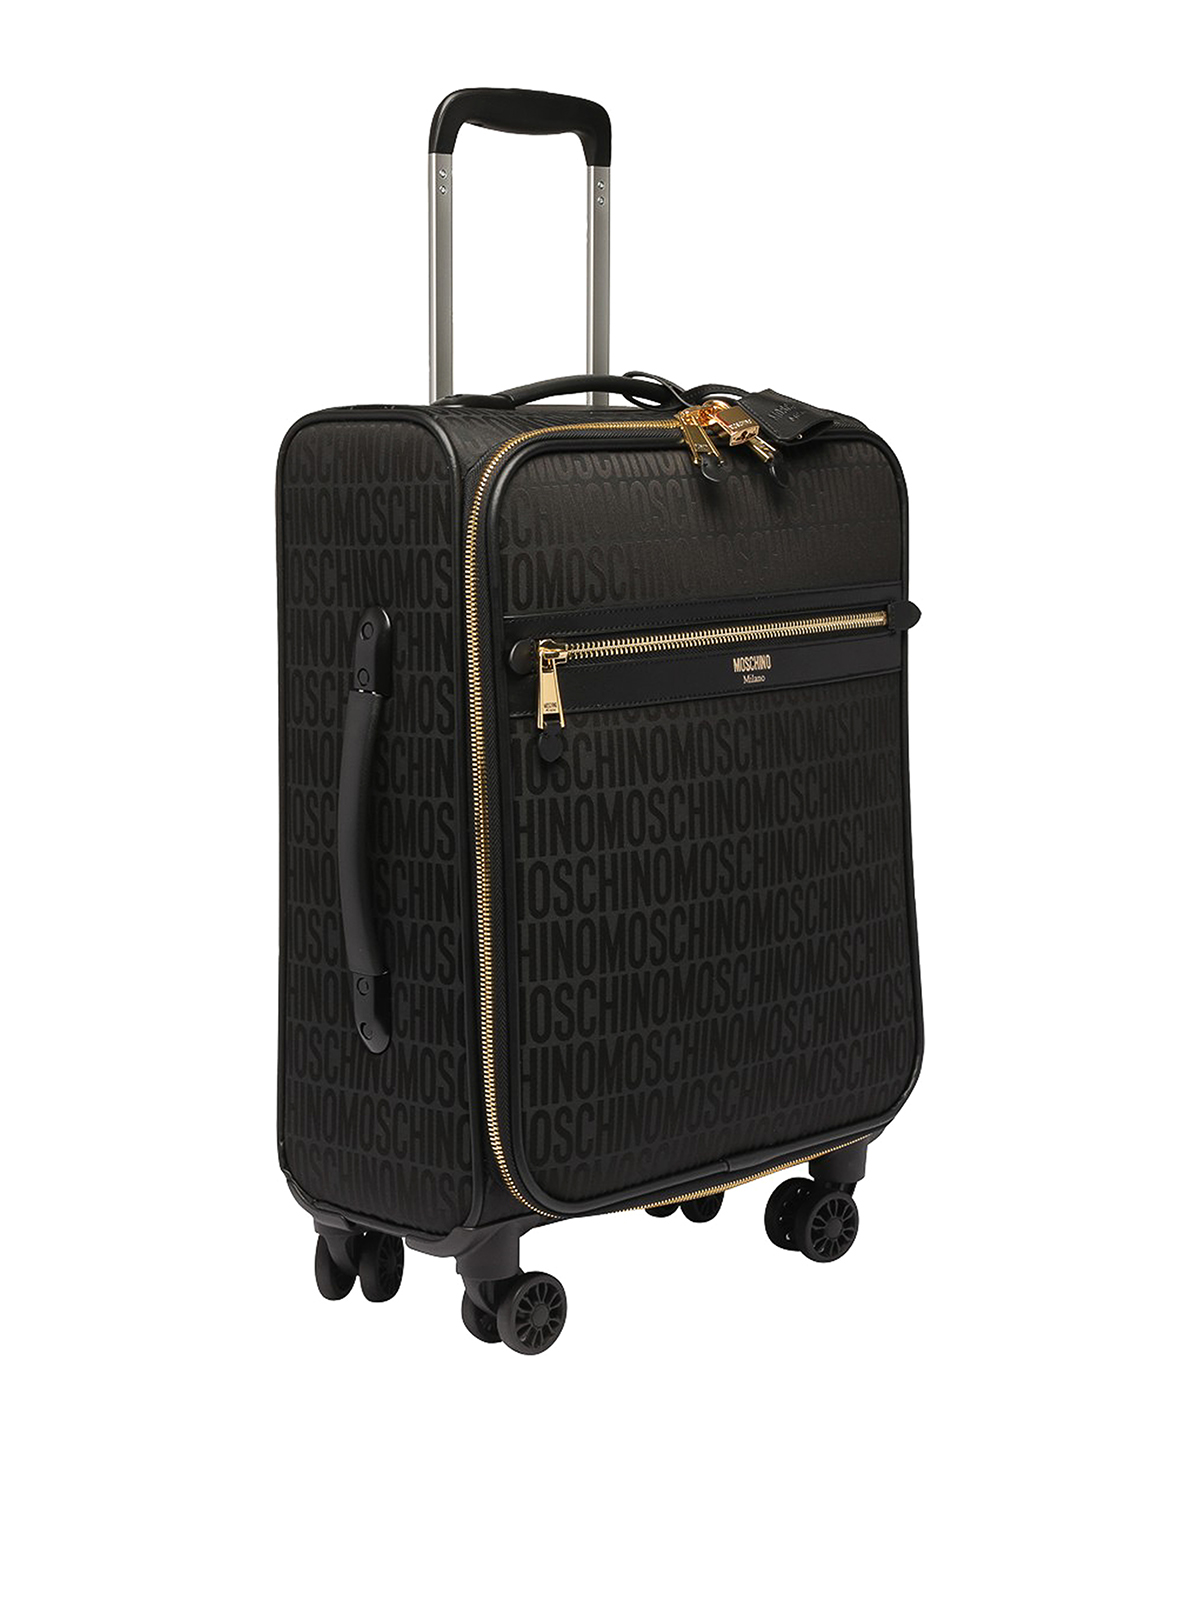 Harmoni Faktisk Held og lykke Luggage & Travel bags Moschino - Monogram trolley with telescopic handle -  860182681555